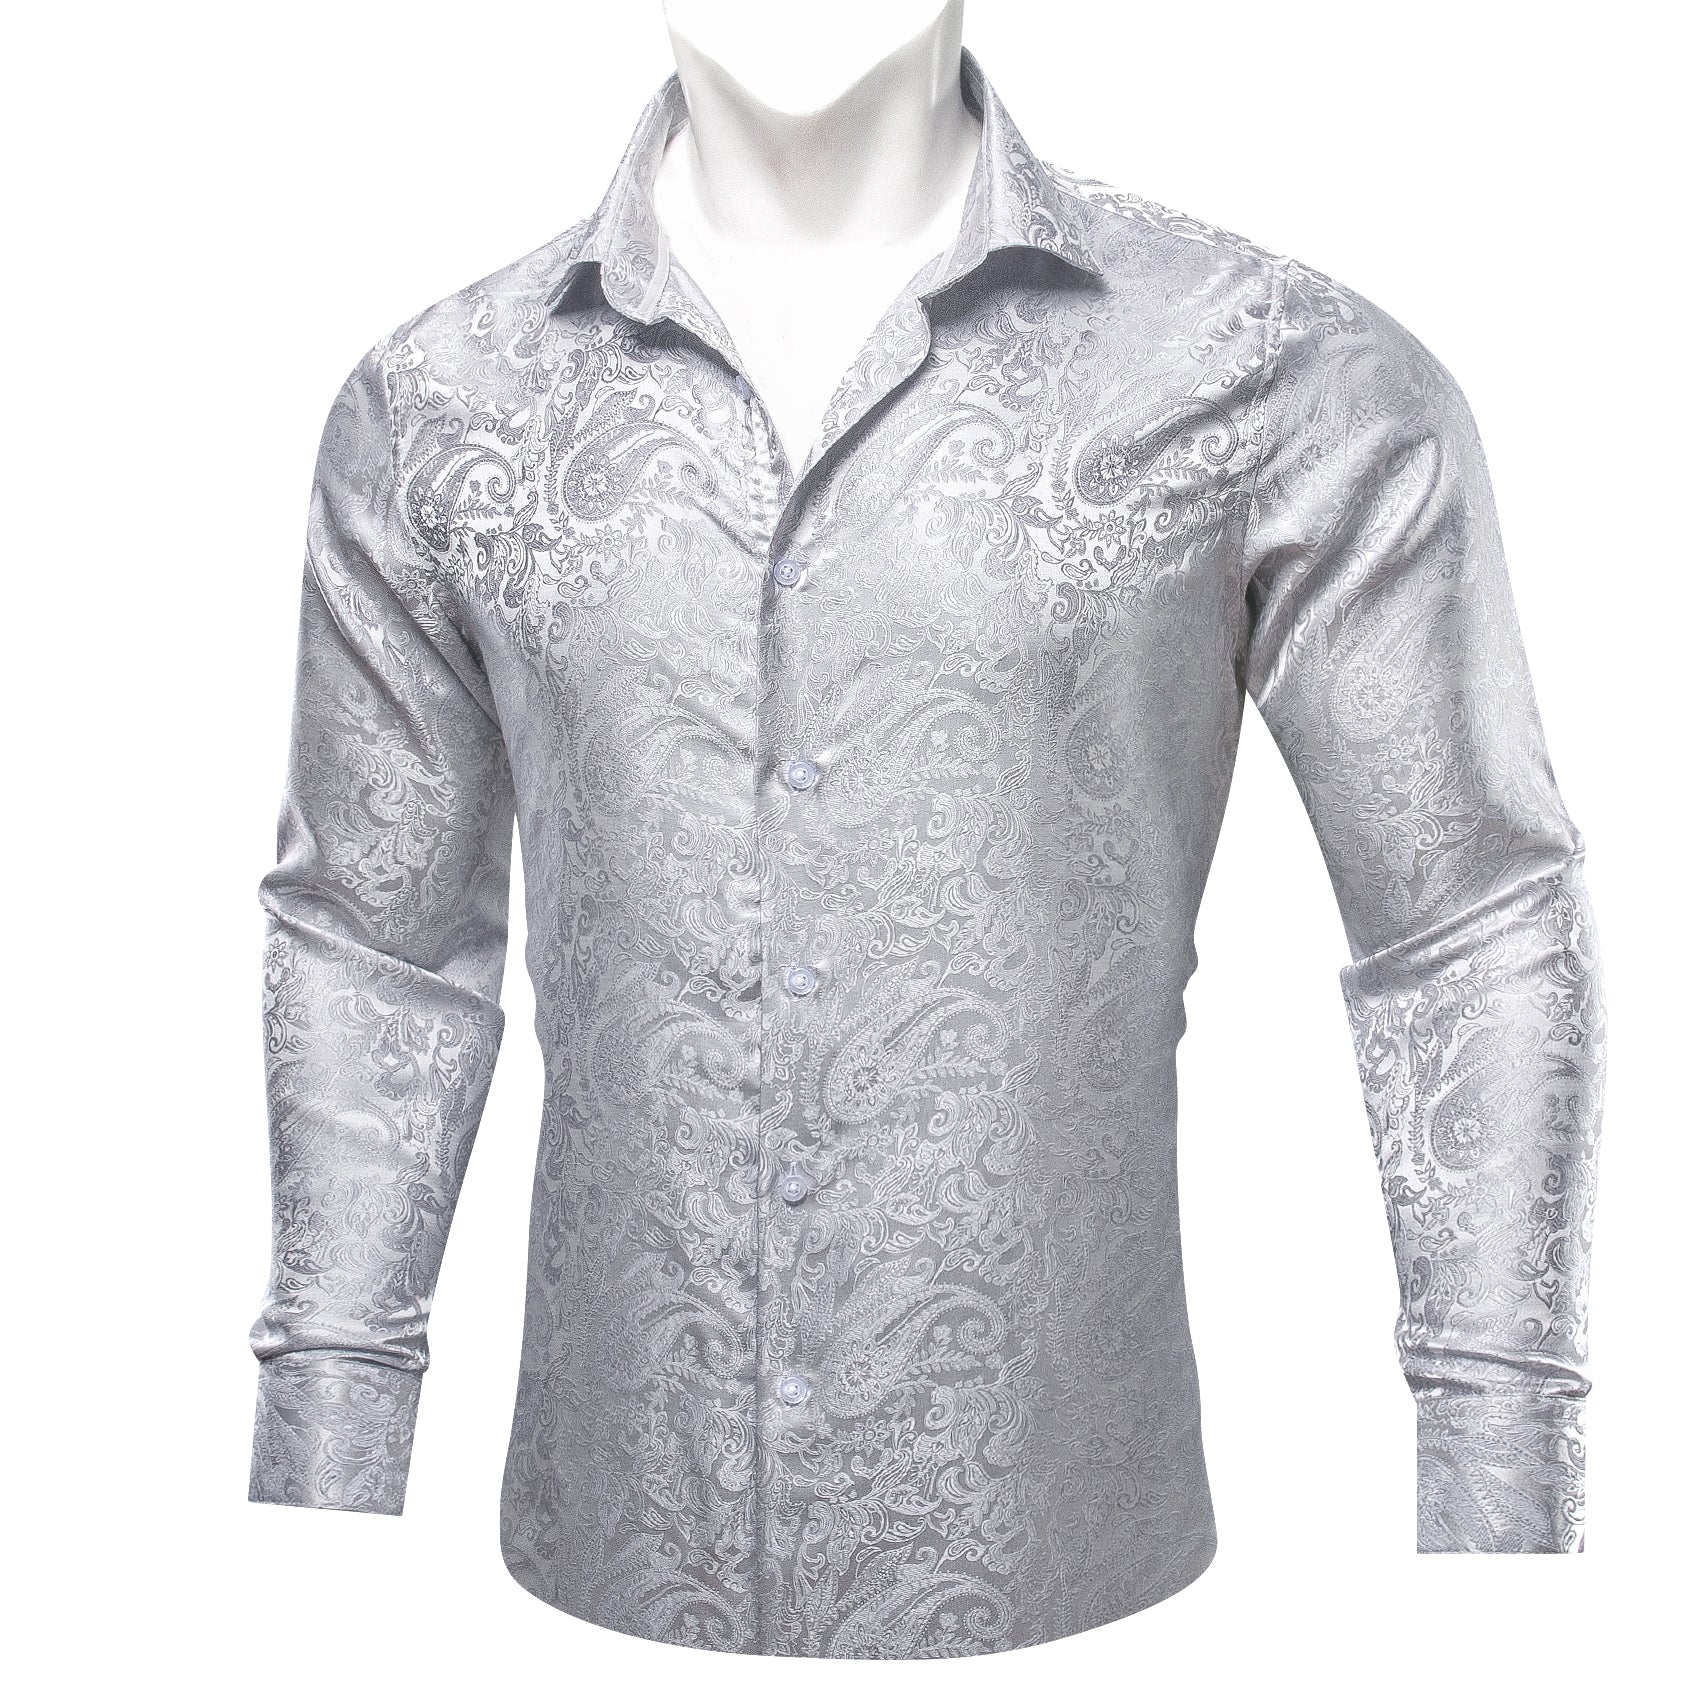 Barry.wang Grey White Paisley Men's Silk Shirt